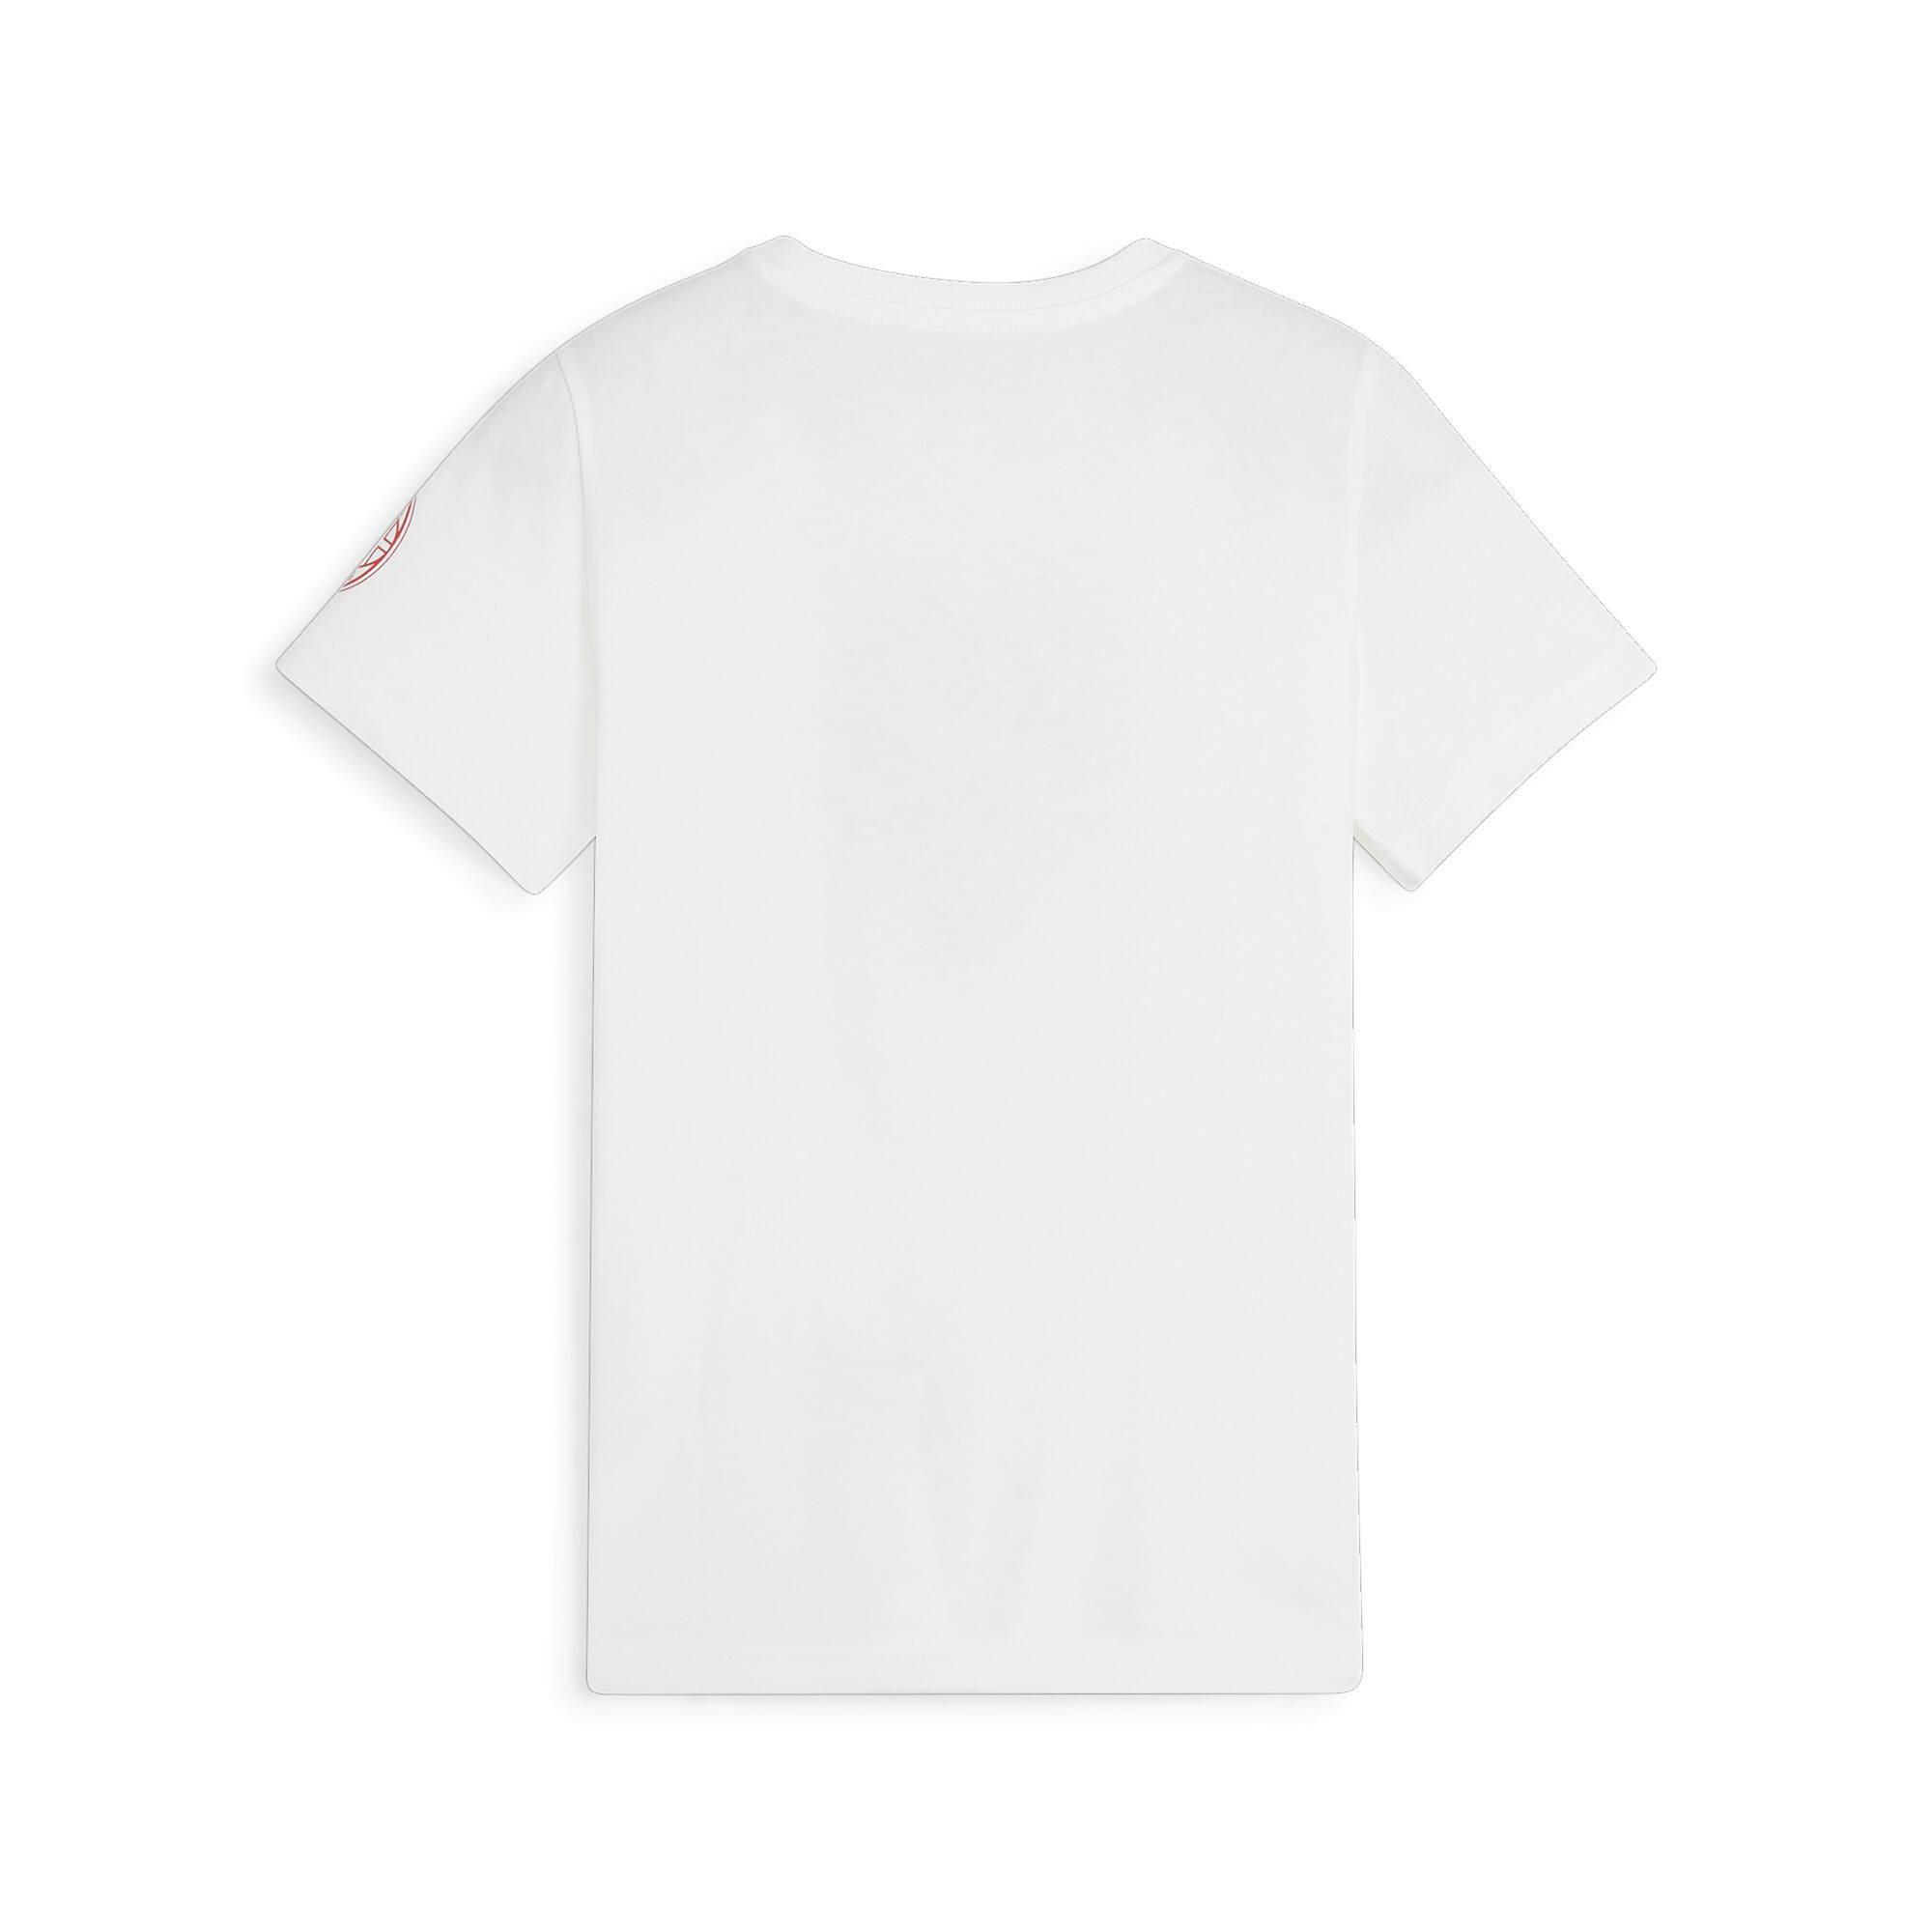 Puma AC Milan Ftblicons Youth T-Shirt, White, Size 9-10Y, Clothing